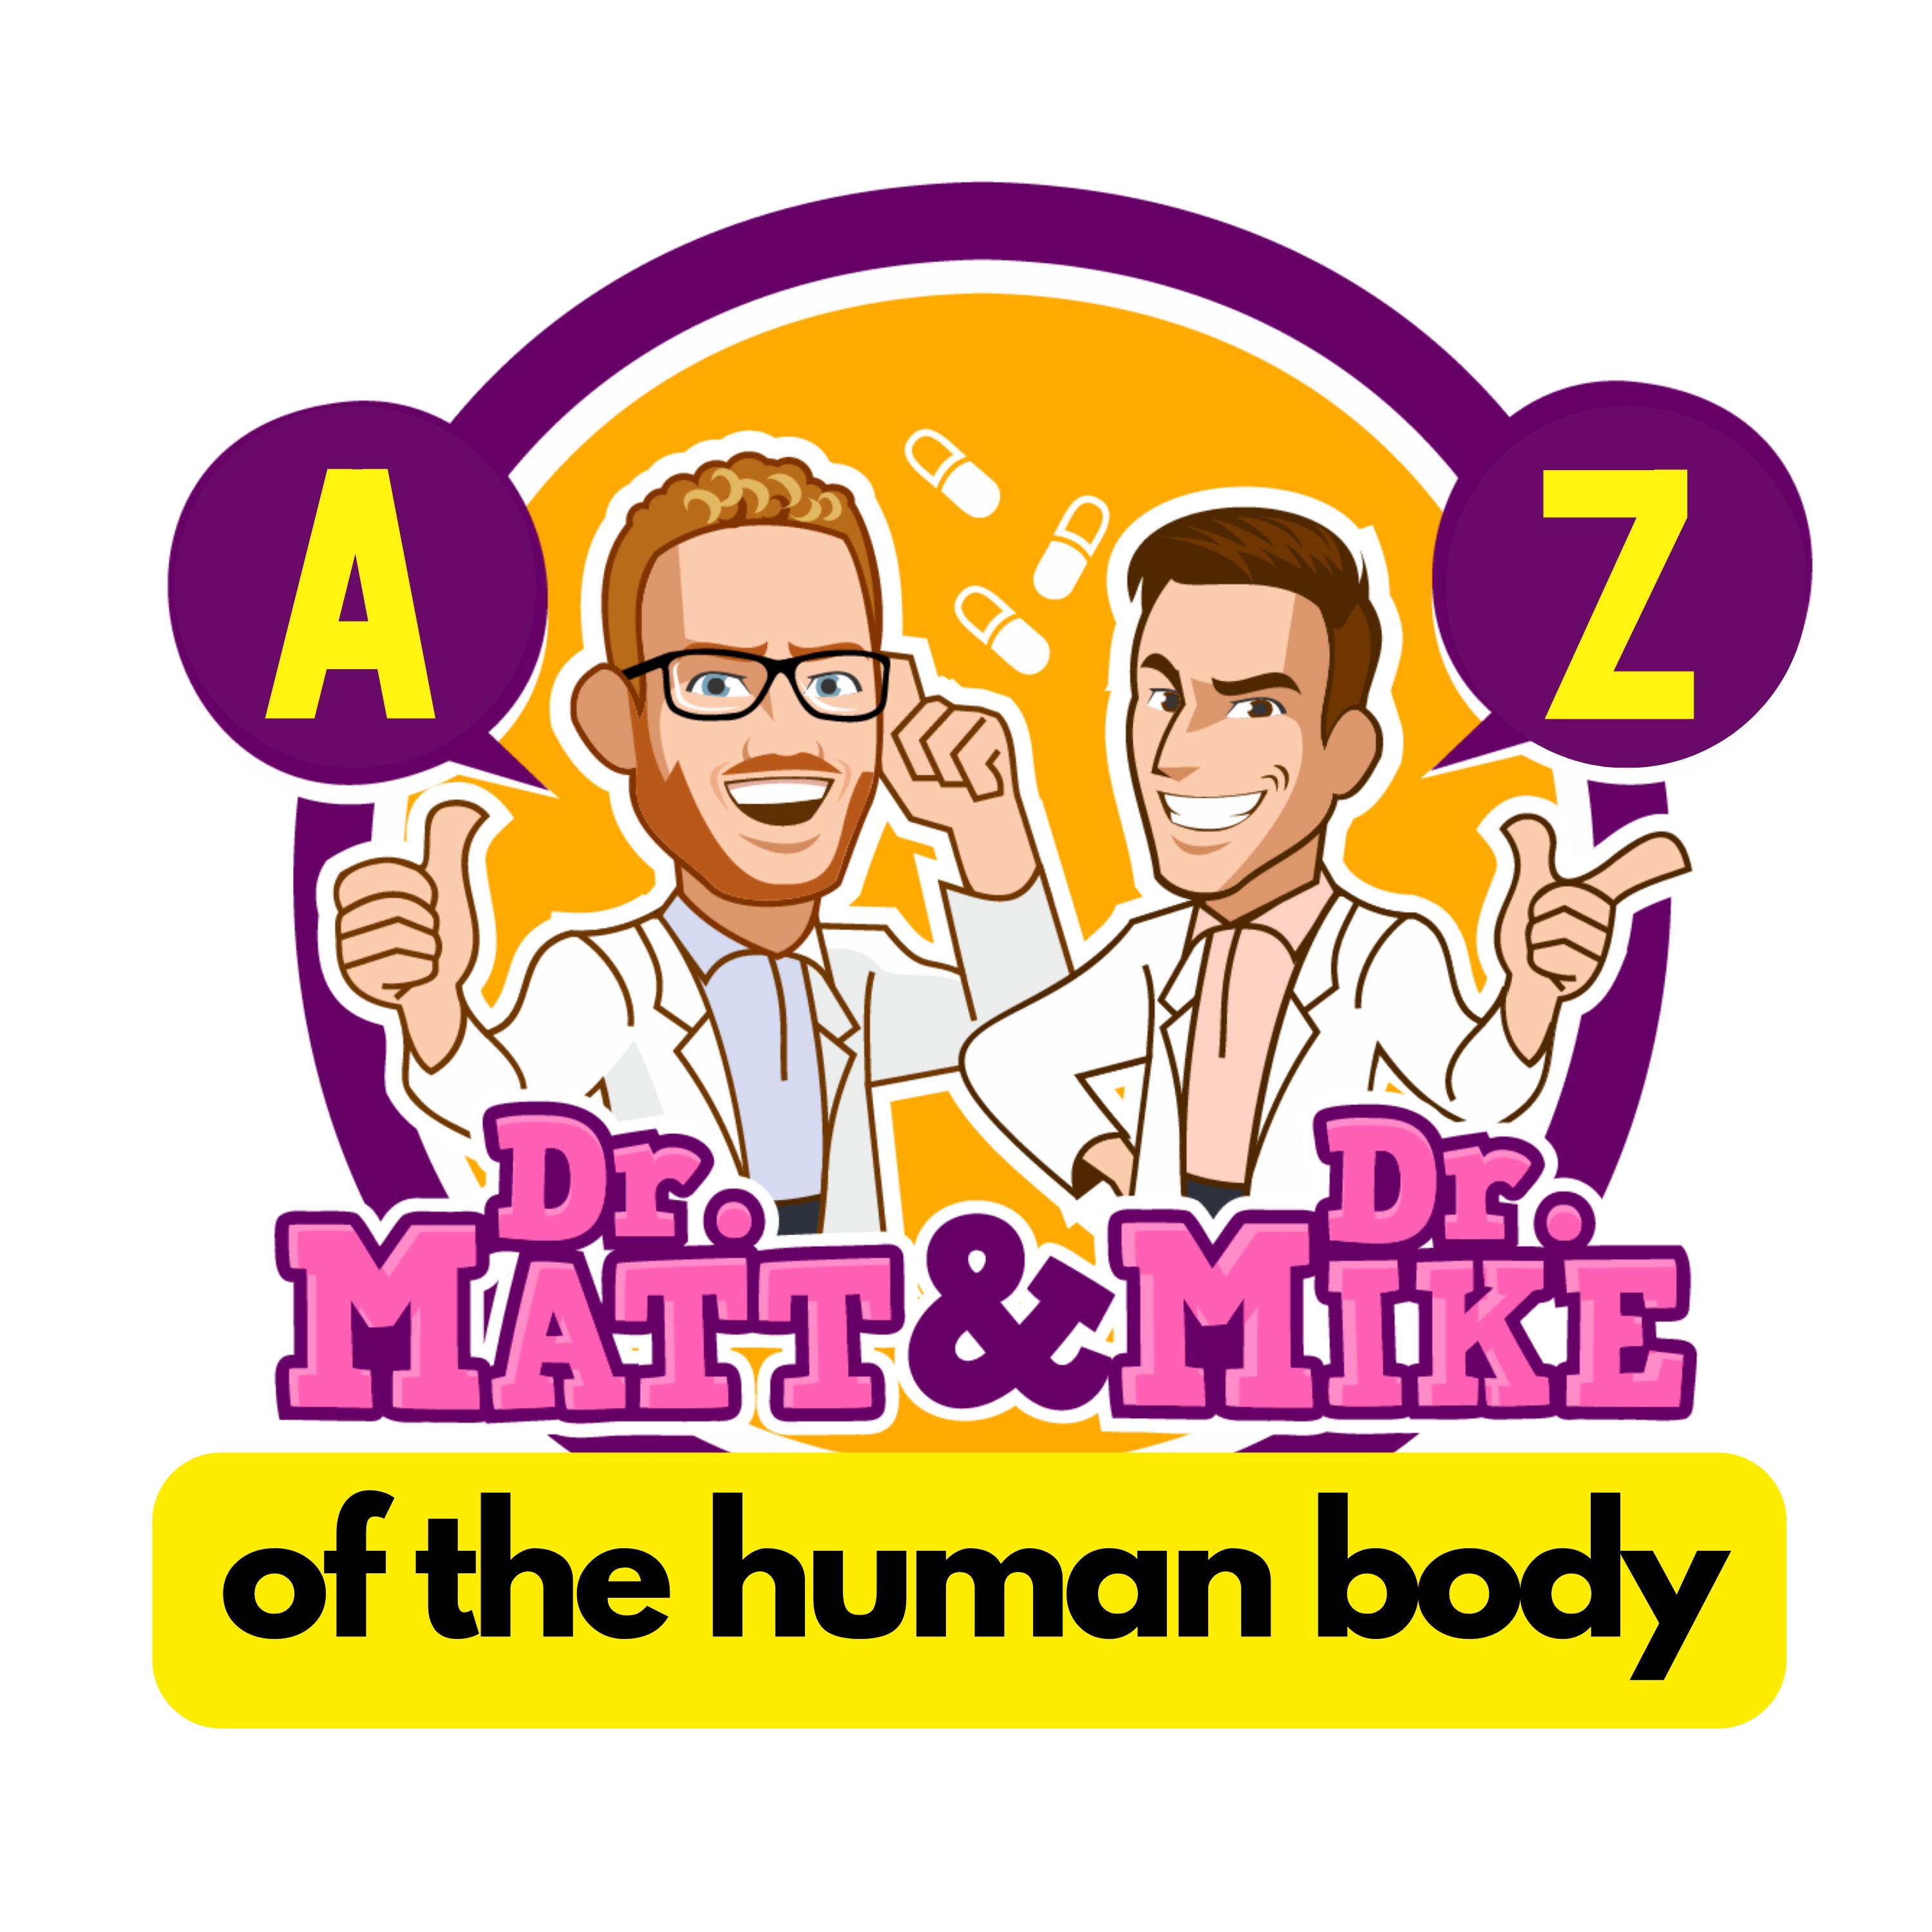 Abdominal Aorta | A-Z of the Human Body